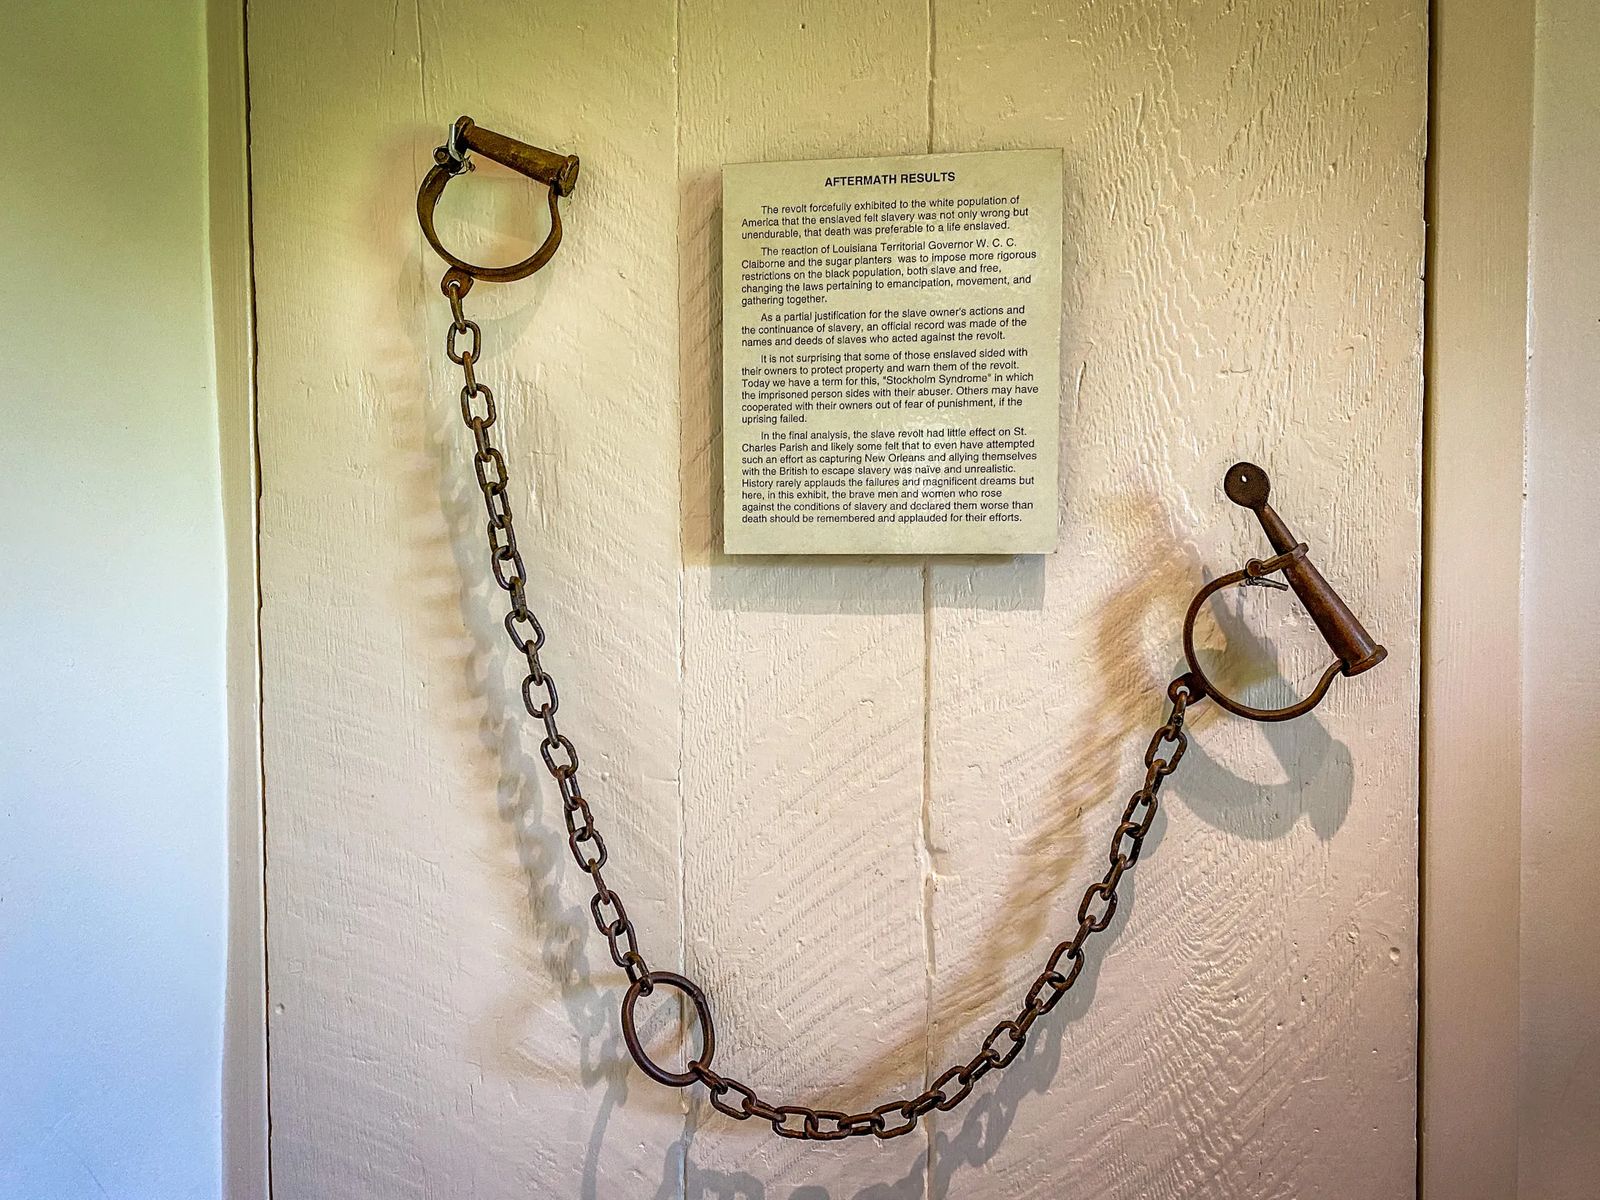 Slave Chains at Destrehan Plantation